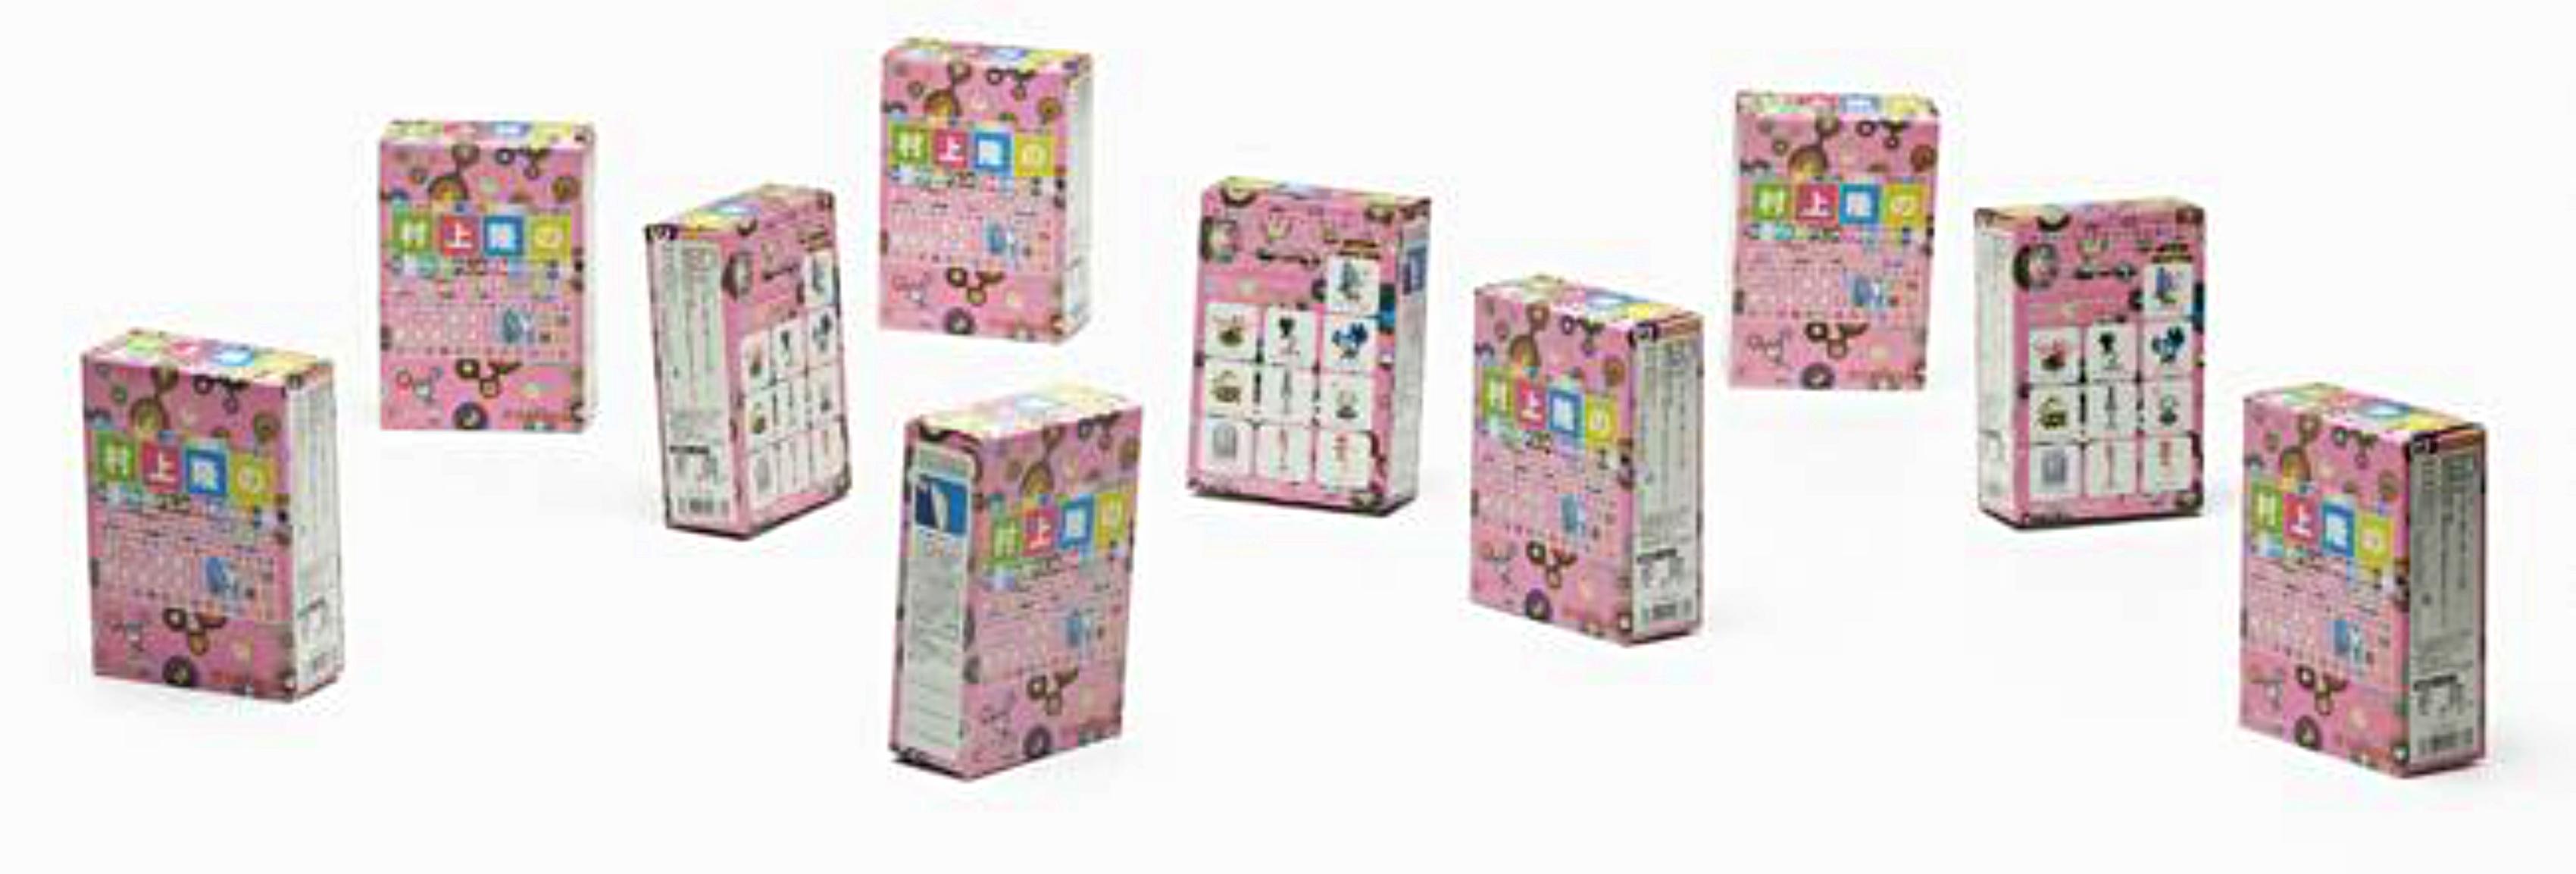 Super Flat Museum Toys (Ten Separate Works in Pink Boxes) - Pop Art Art by Takashi Murakami